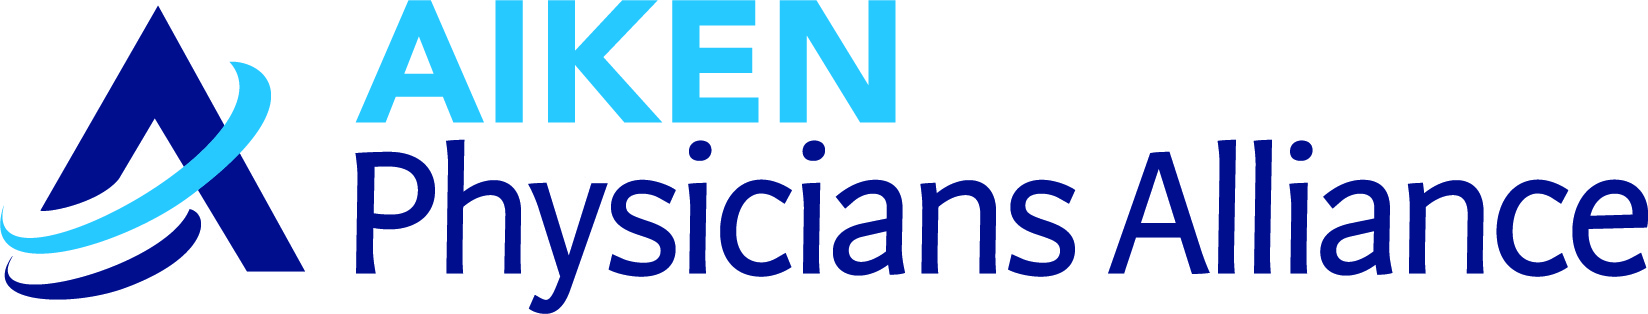 Aiken Physicians Alliance - Orthopedics